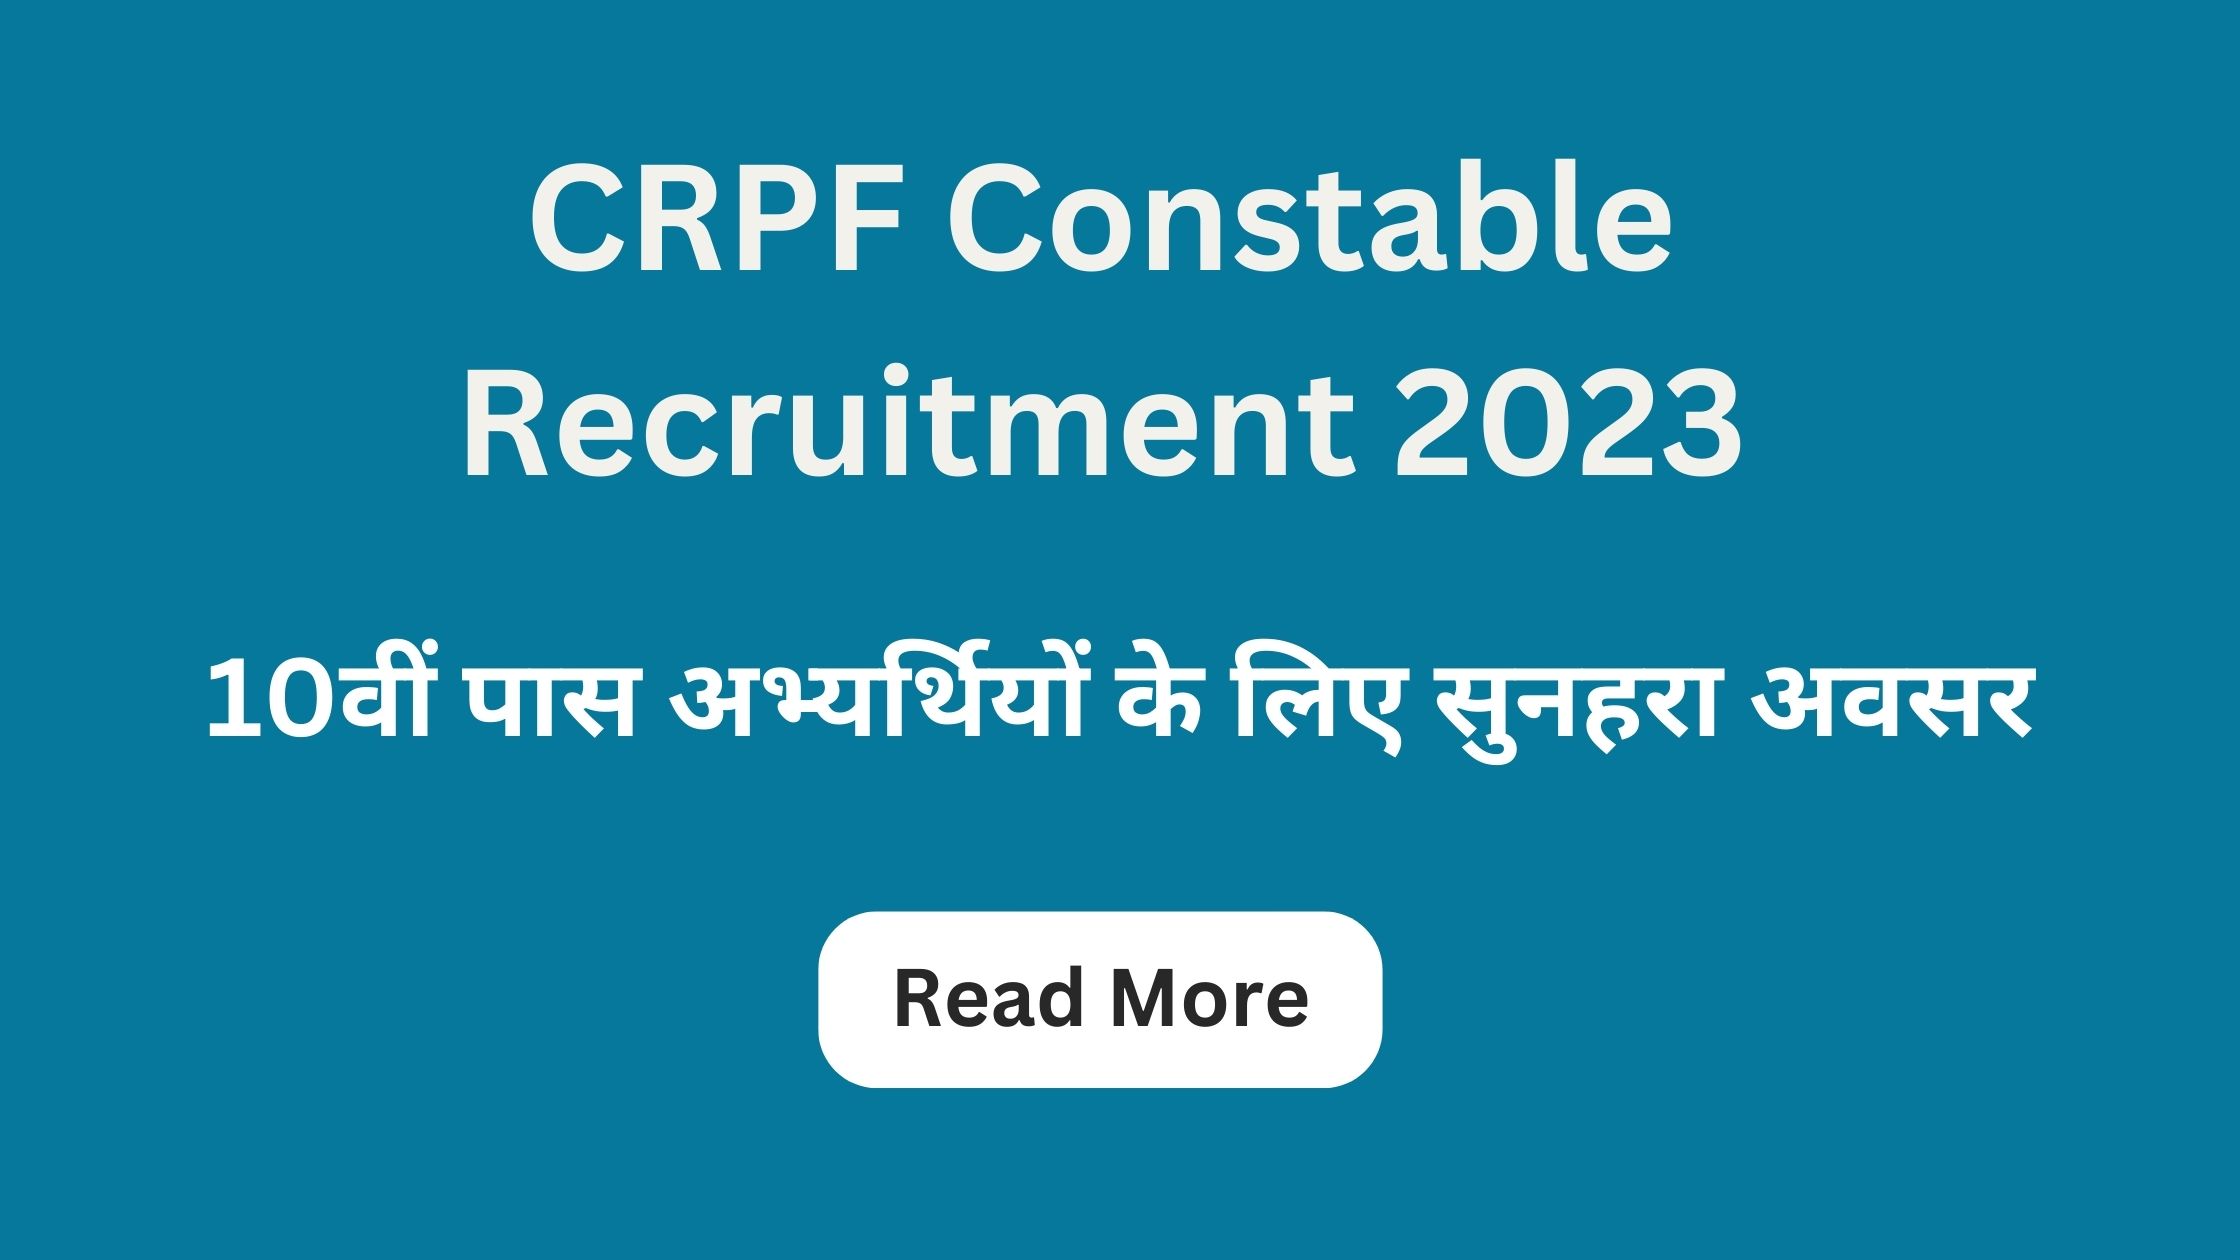 CRPF Constable Recruitment 2023 Notification qualification 10th pass